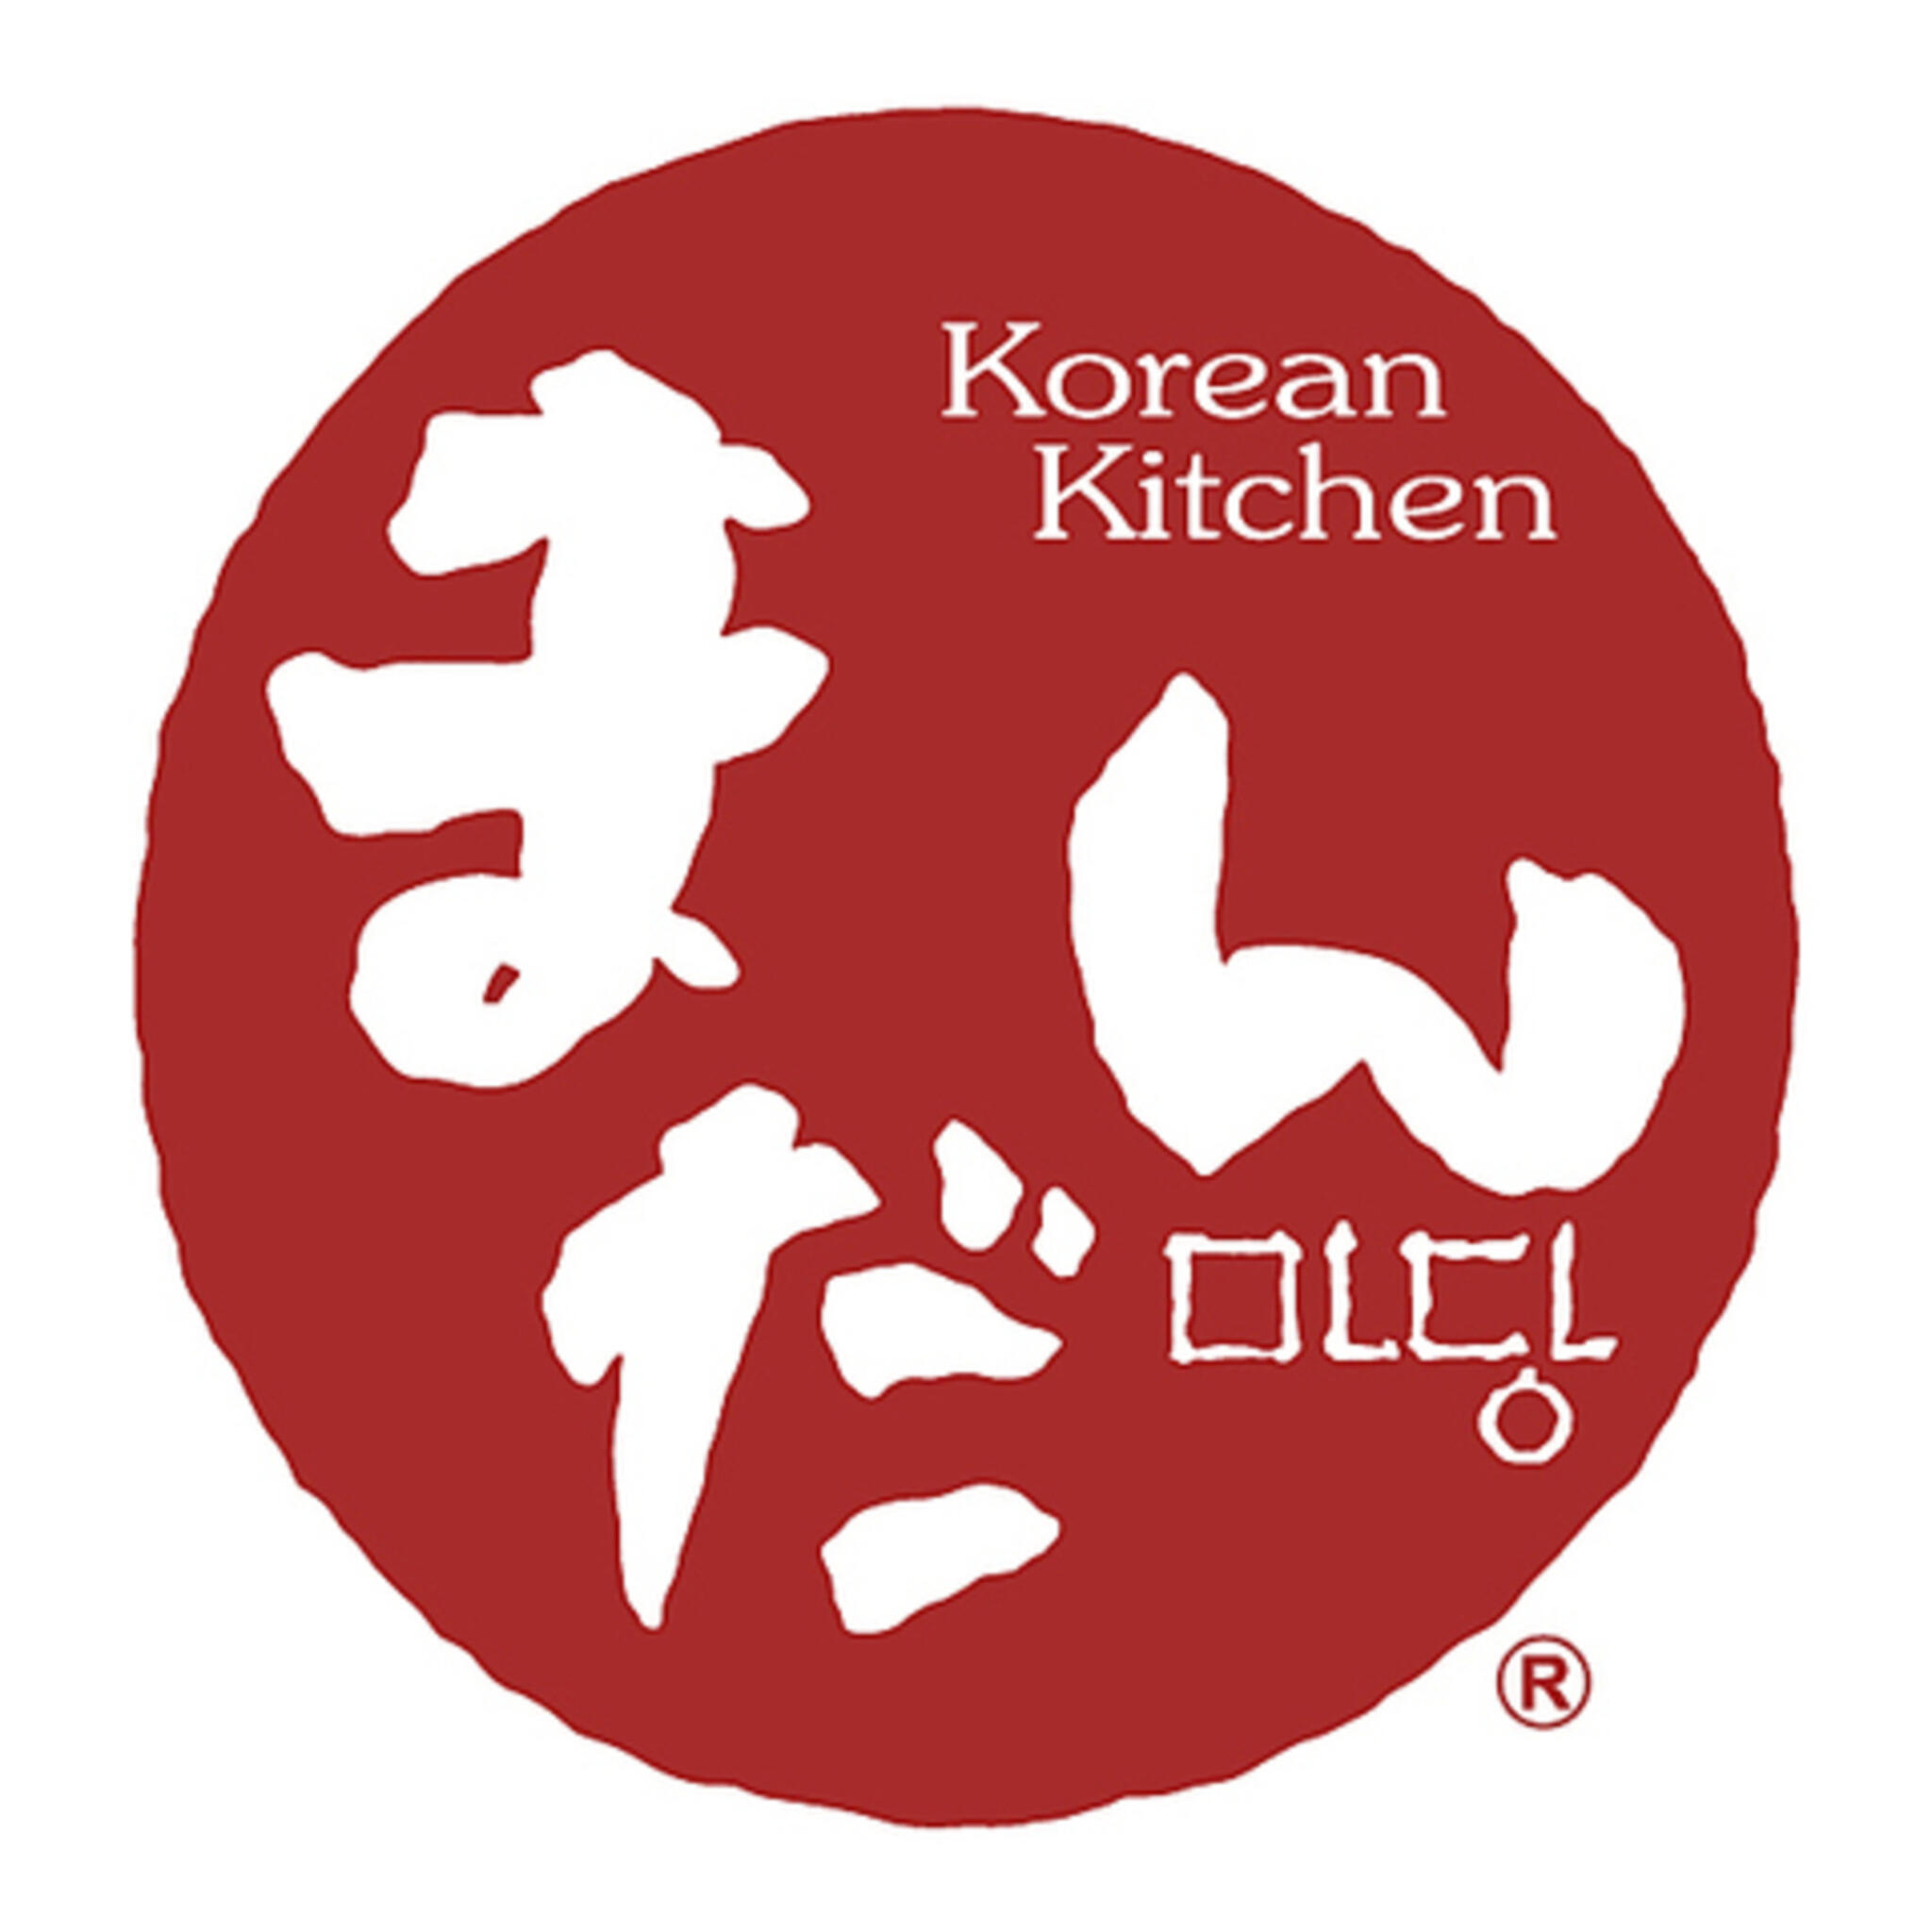 Korean Kitchen まだん 鶴橋本店の代表写真1